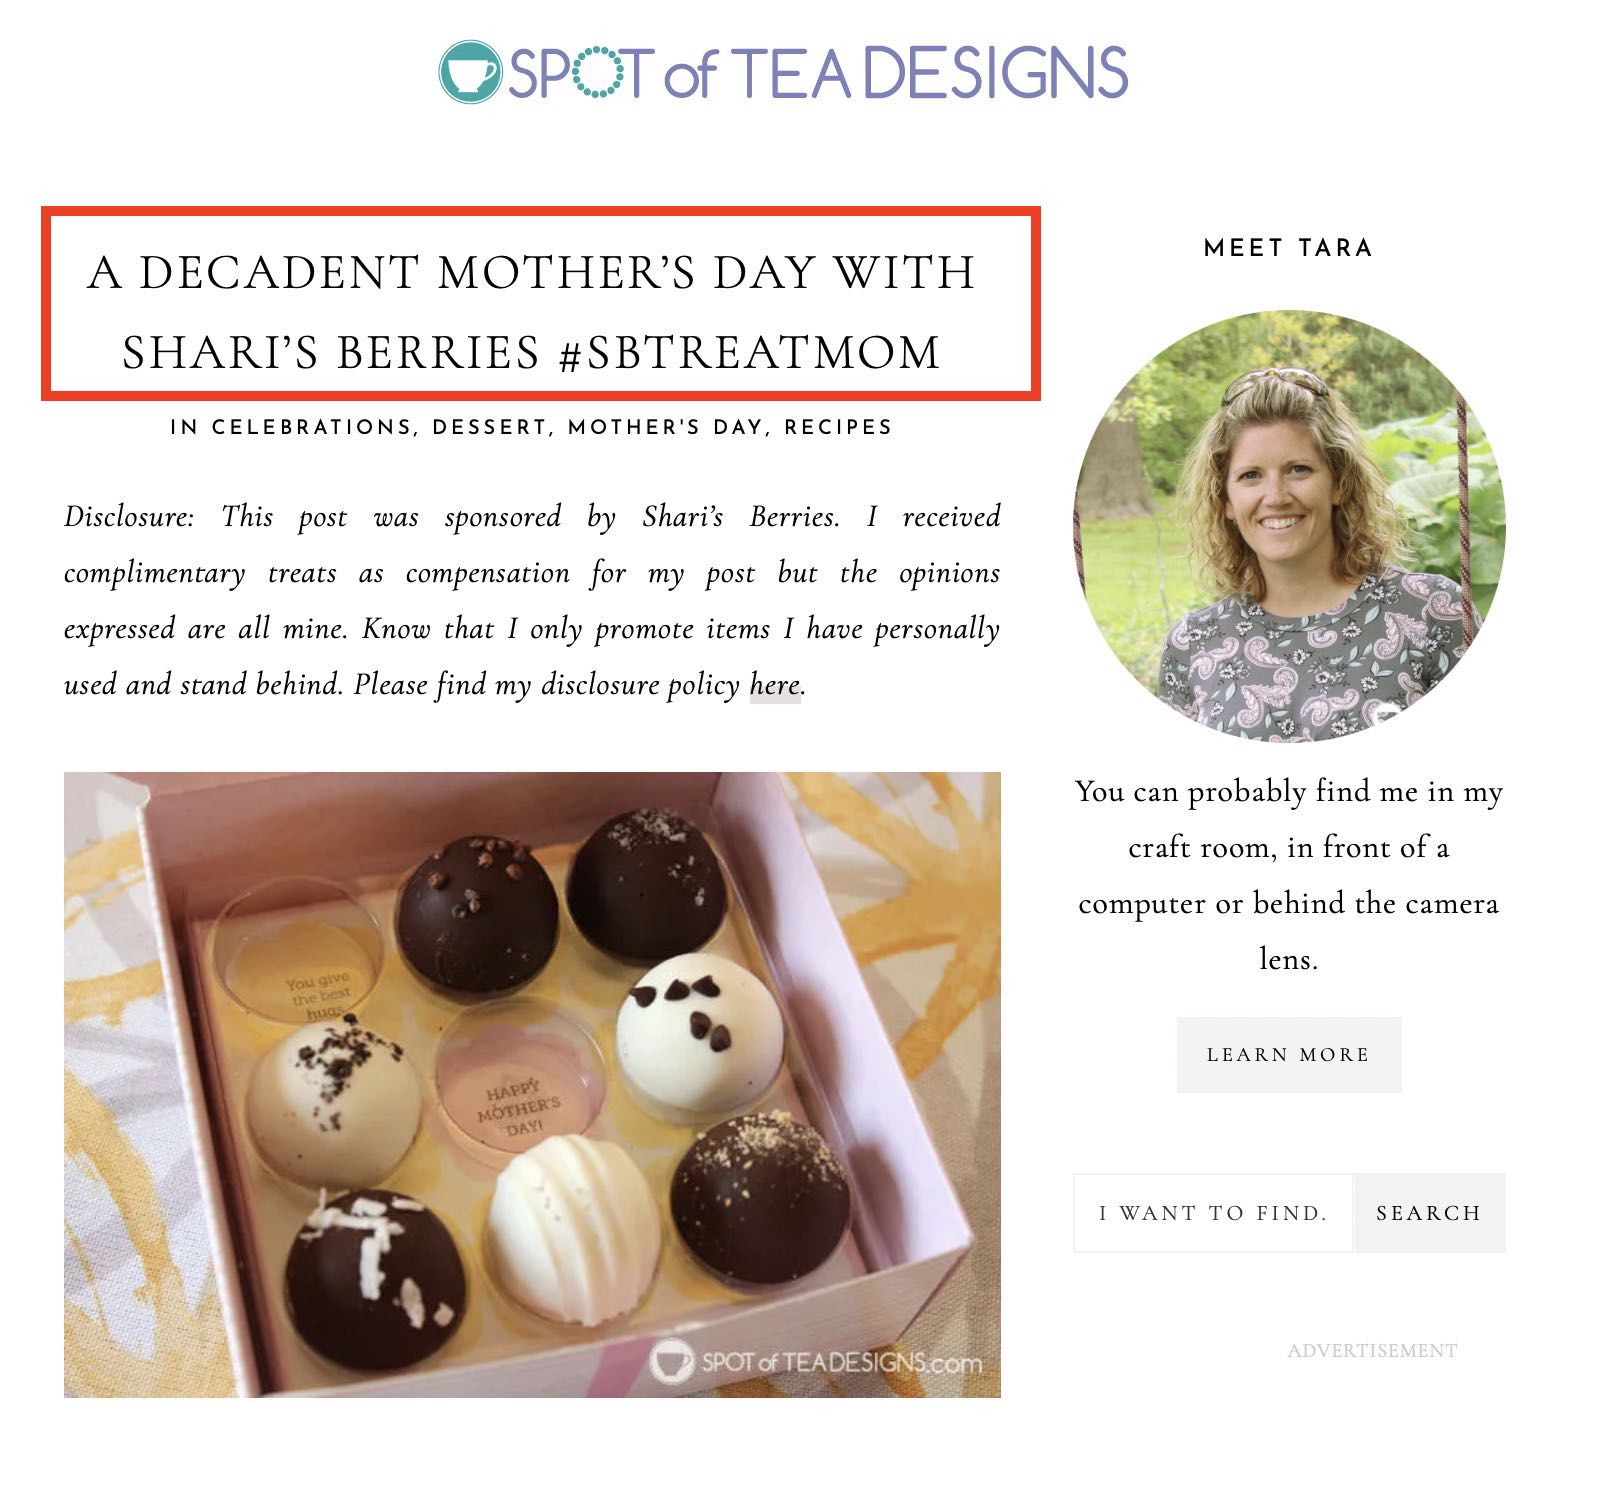 Screenshot of blog post on Spot of Tea Designs' website